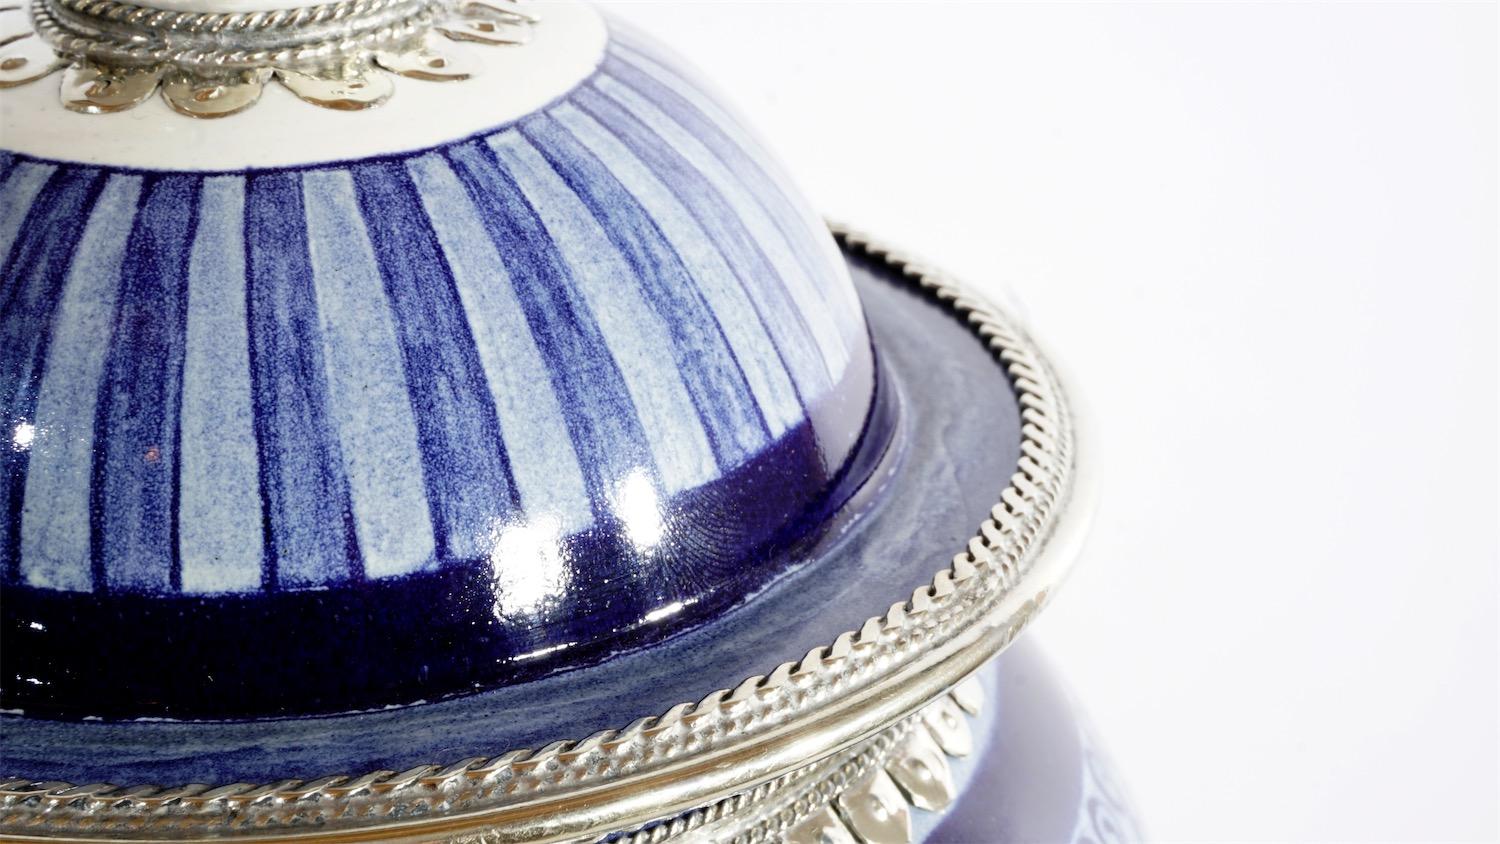 Mexican Blue and White Jar, Ceramic and White Metal ‘Alpaca’, Handmade